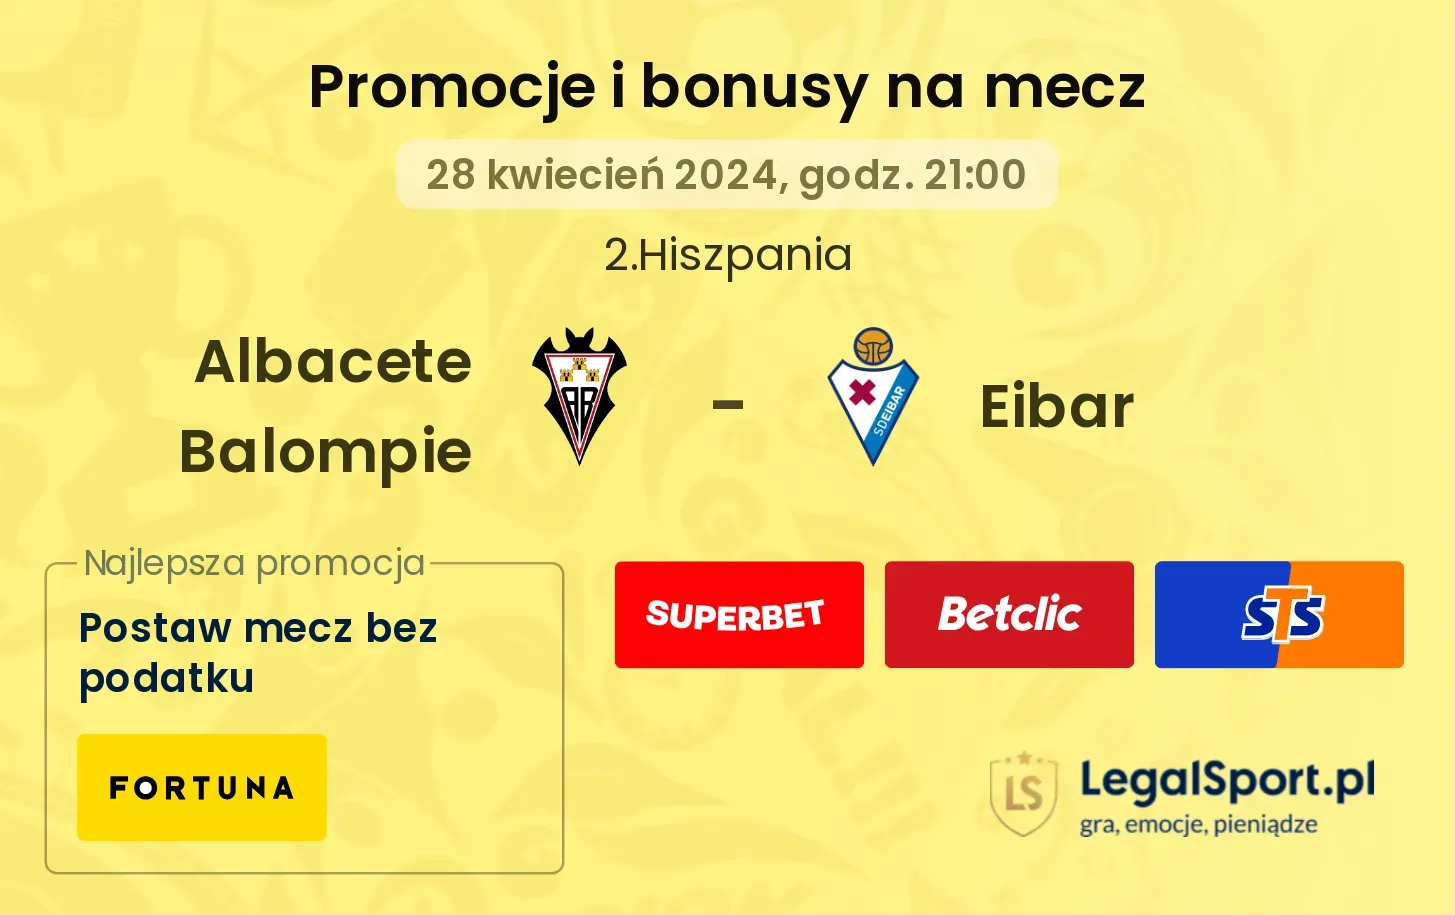 Albacete Balompie - Eibar promocje bonusy na mecz